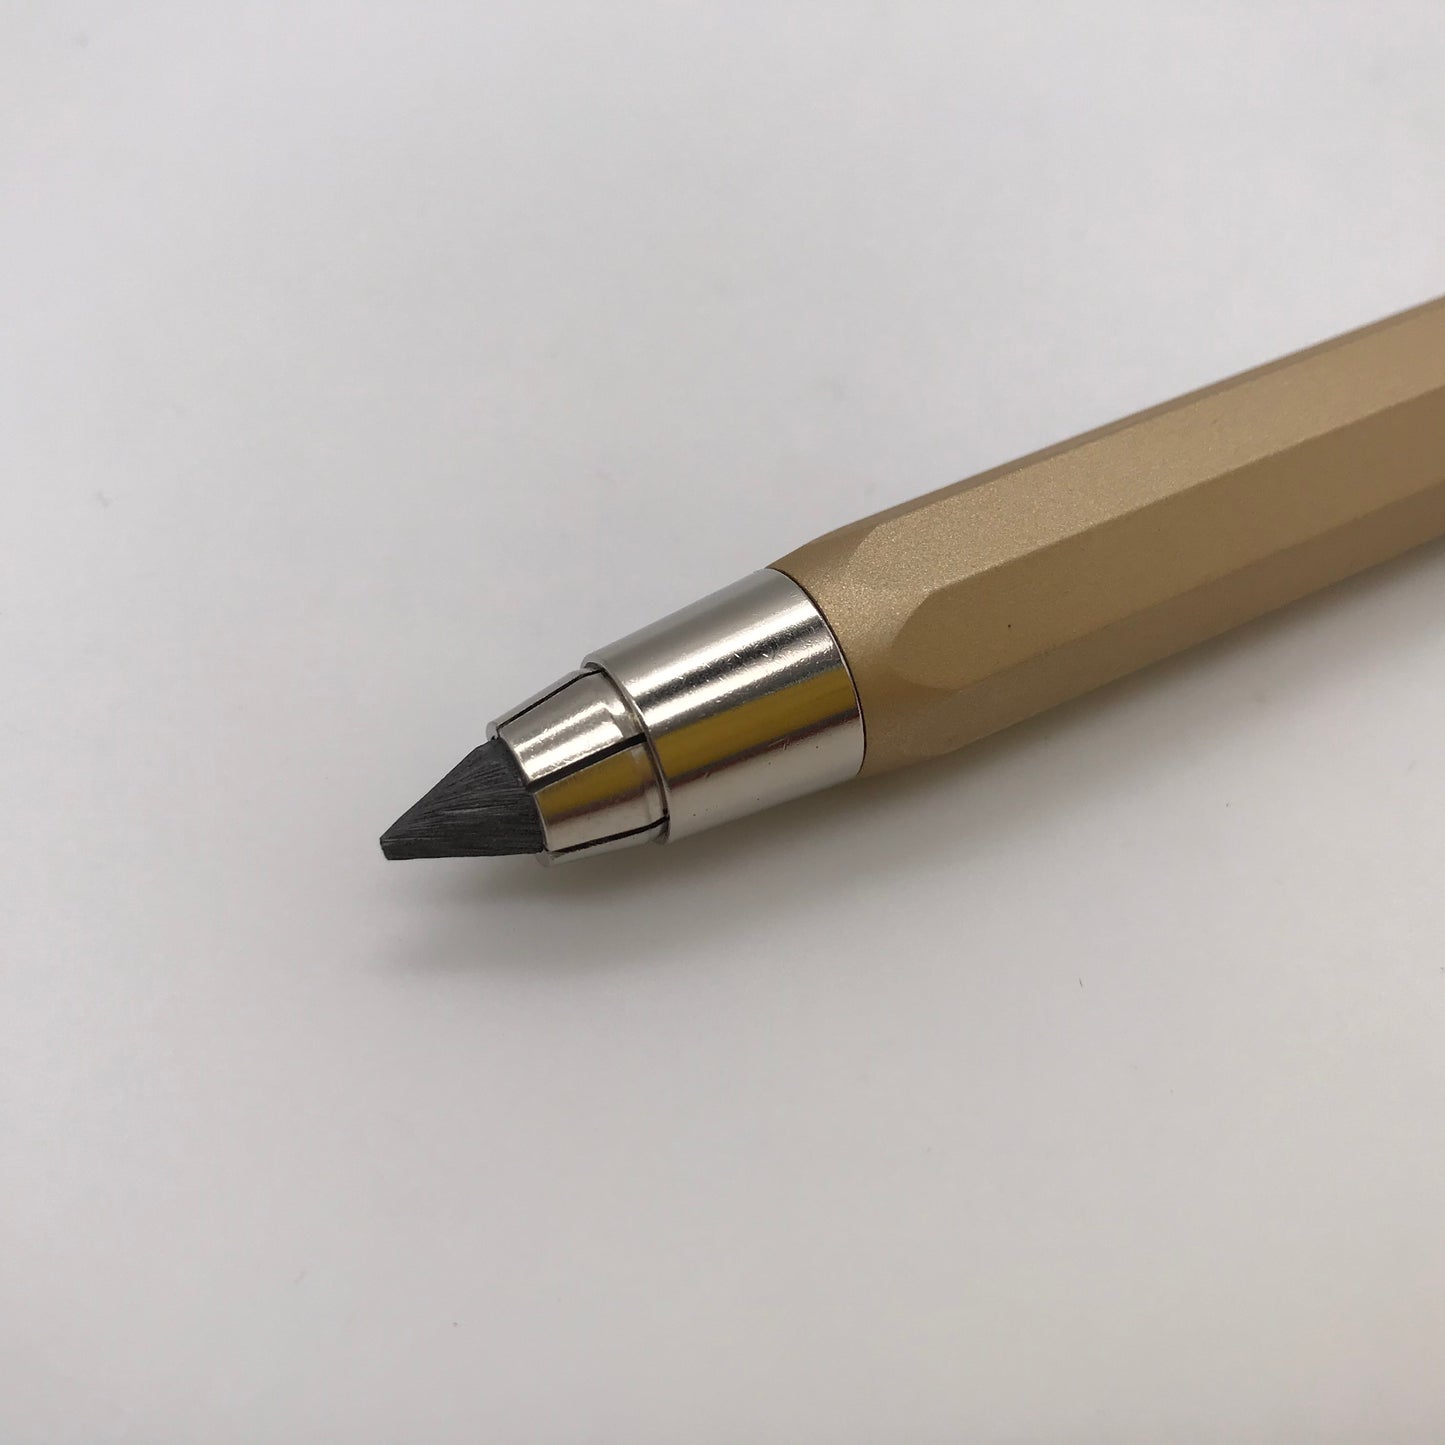 Hardtmuth 5.6 Mechanical Pencil Leads